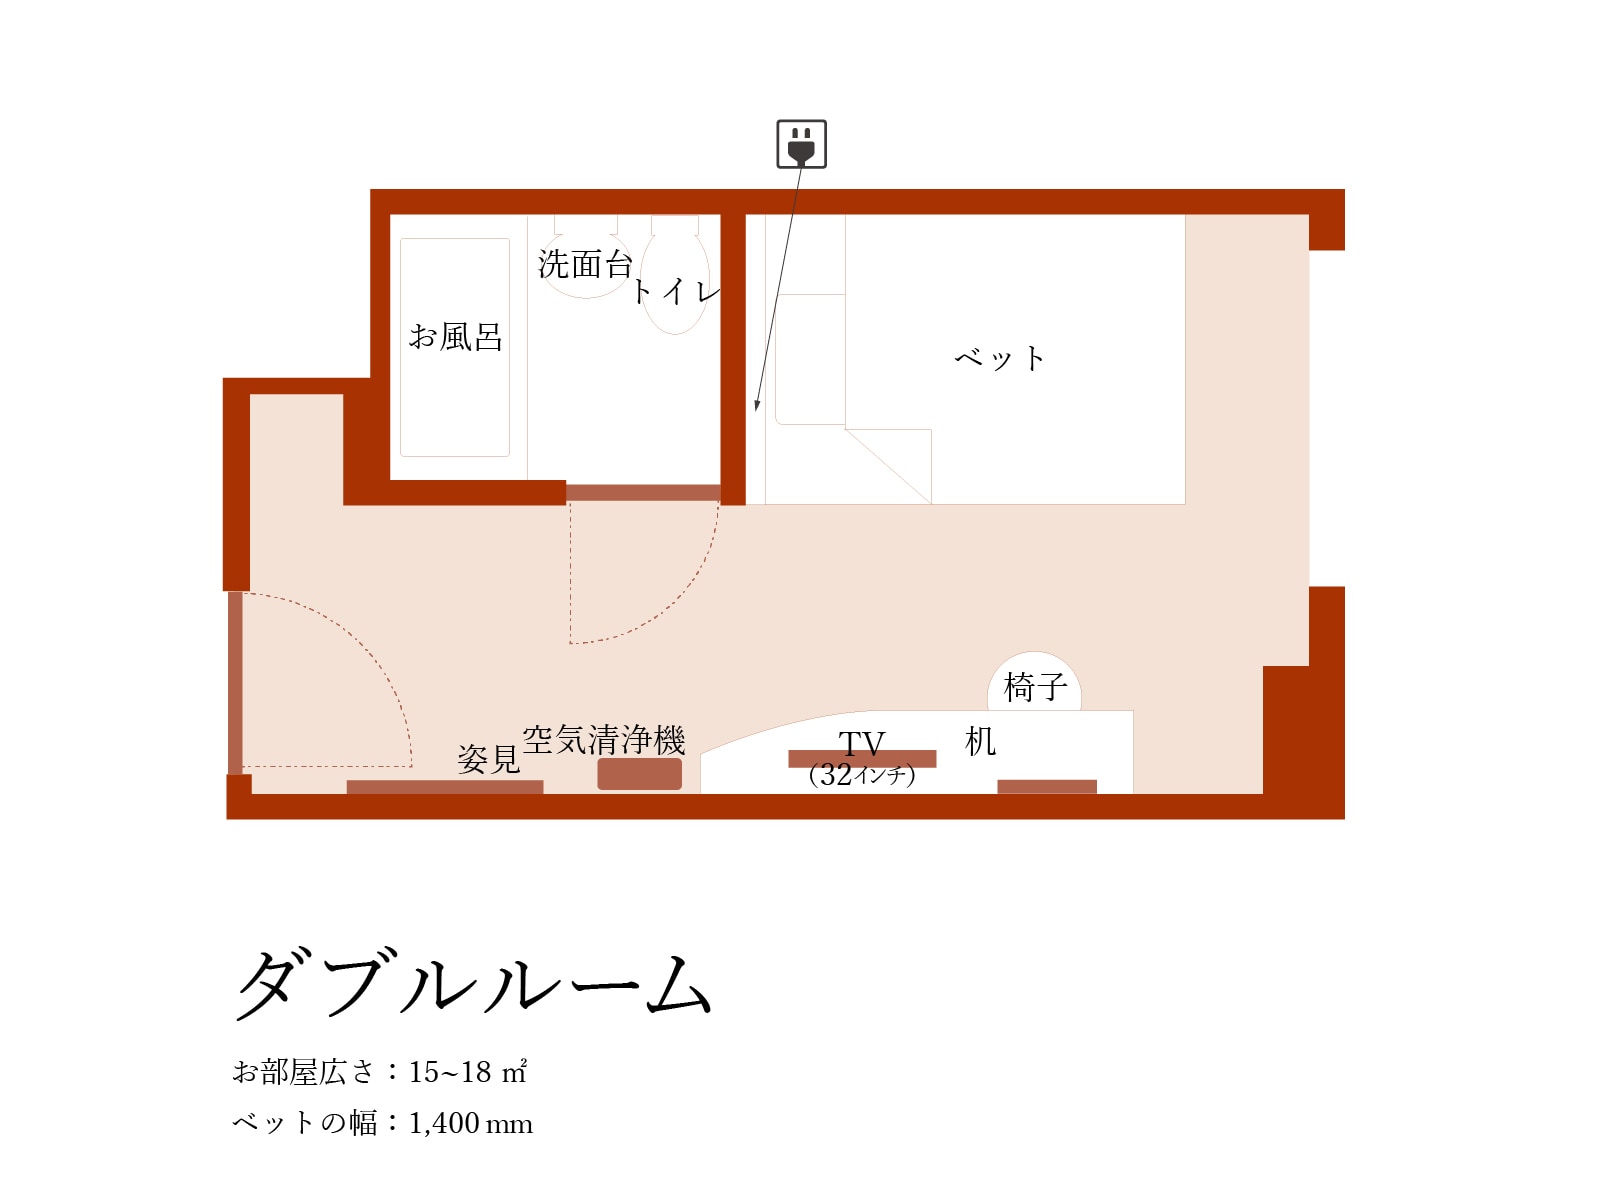 Double room floor plan (with works of art) Room details